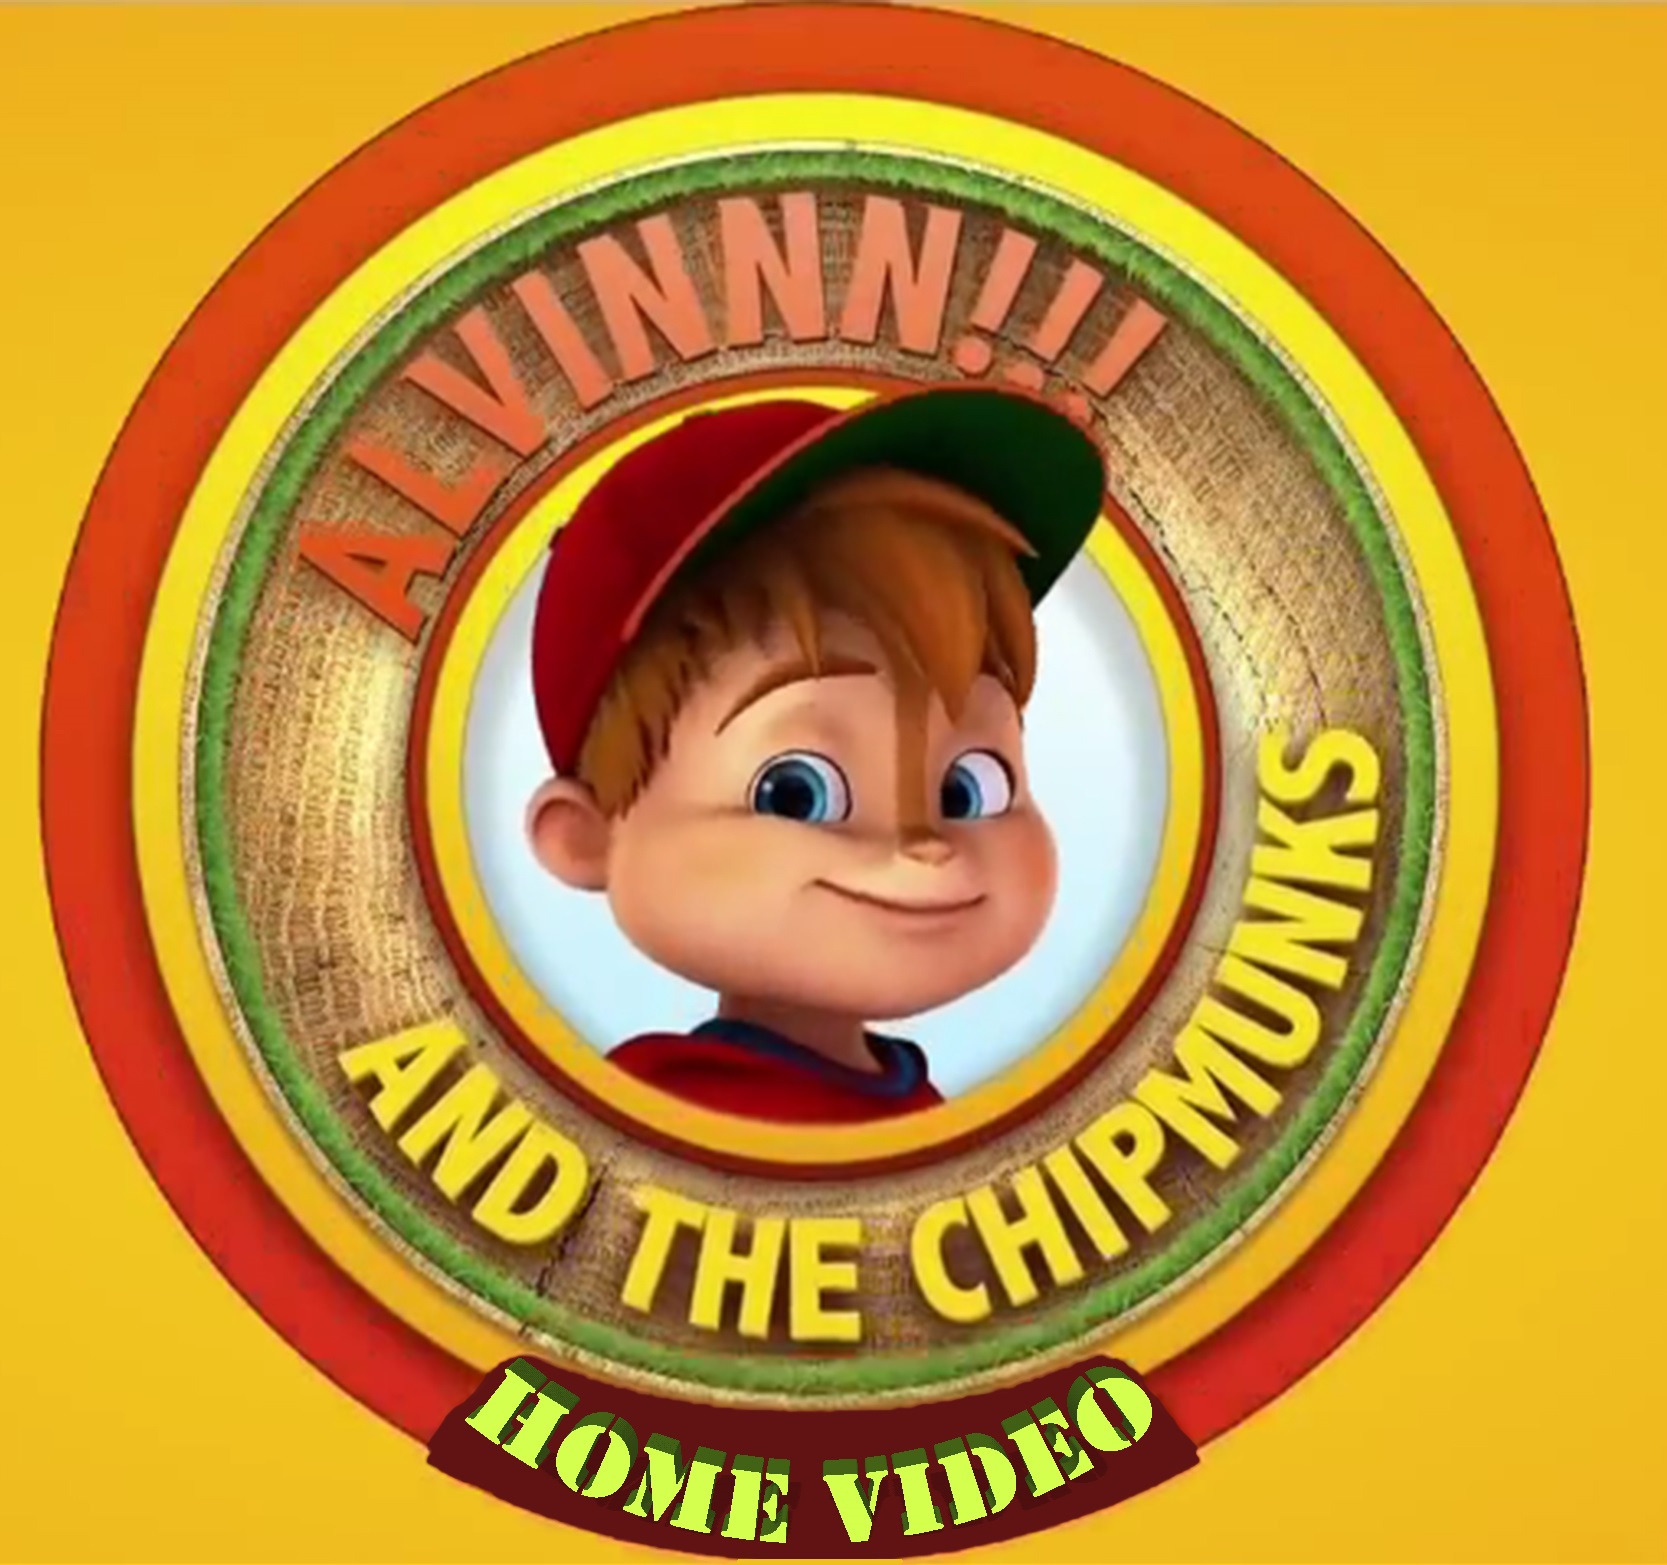 Alvin The Chipmunks Home Video The Parody Wiki FANDOM Powered